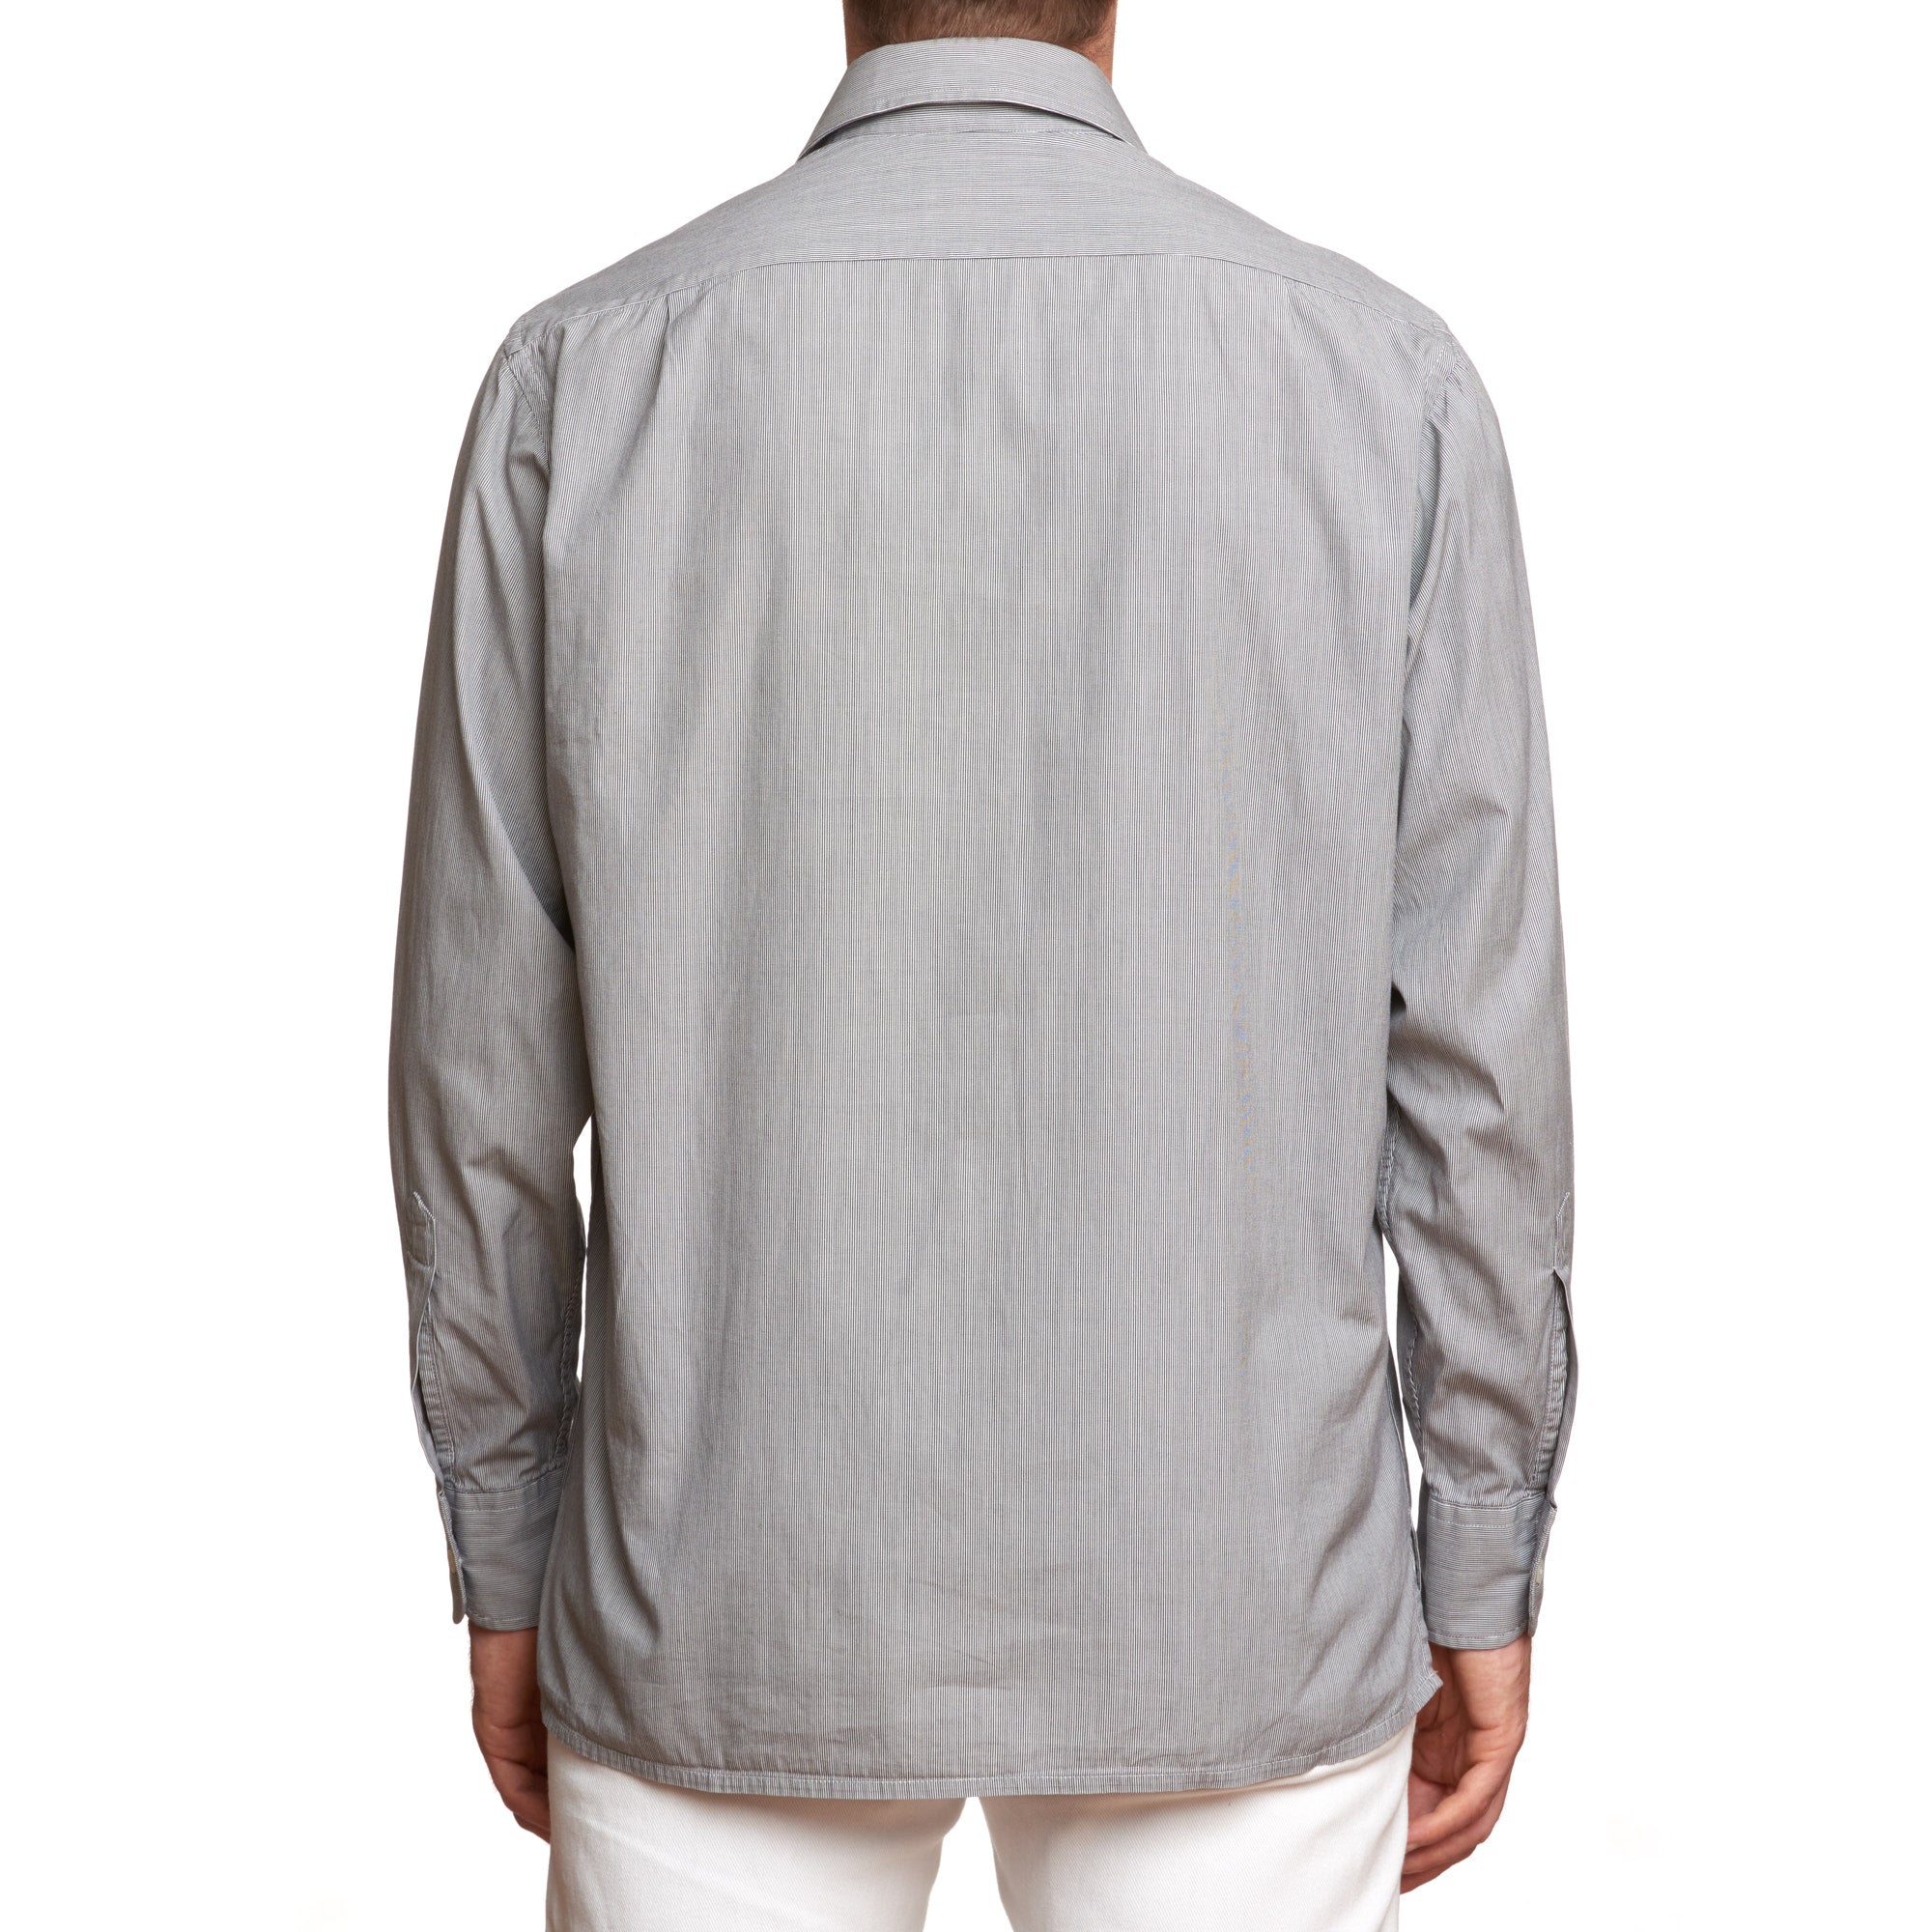 JAY KOS New York Gray Striped Cotton Shirt EU 41 US 16